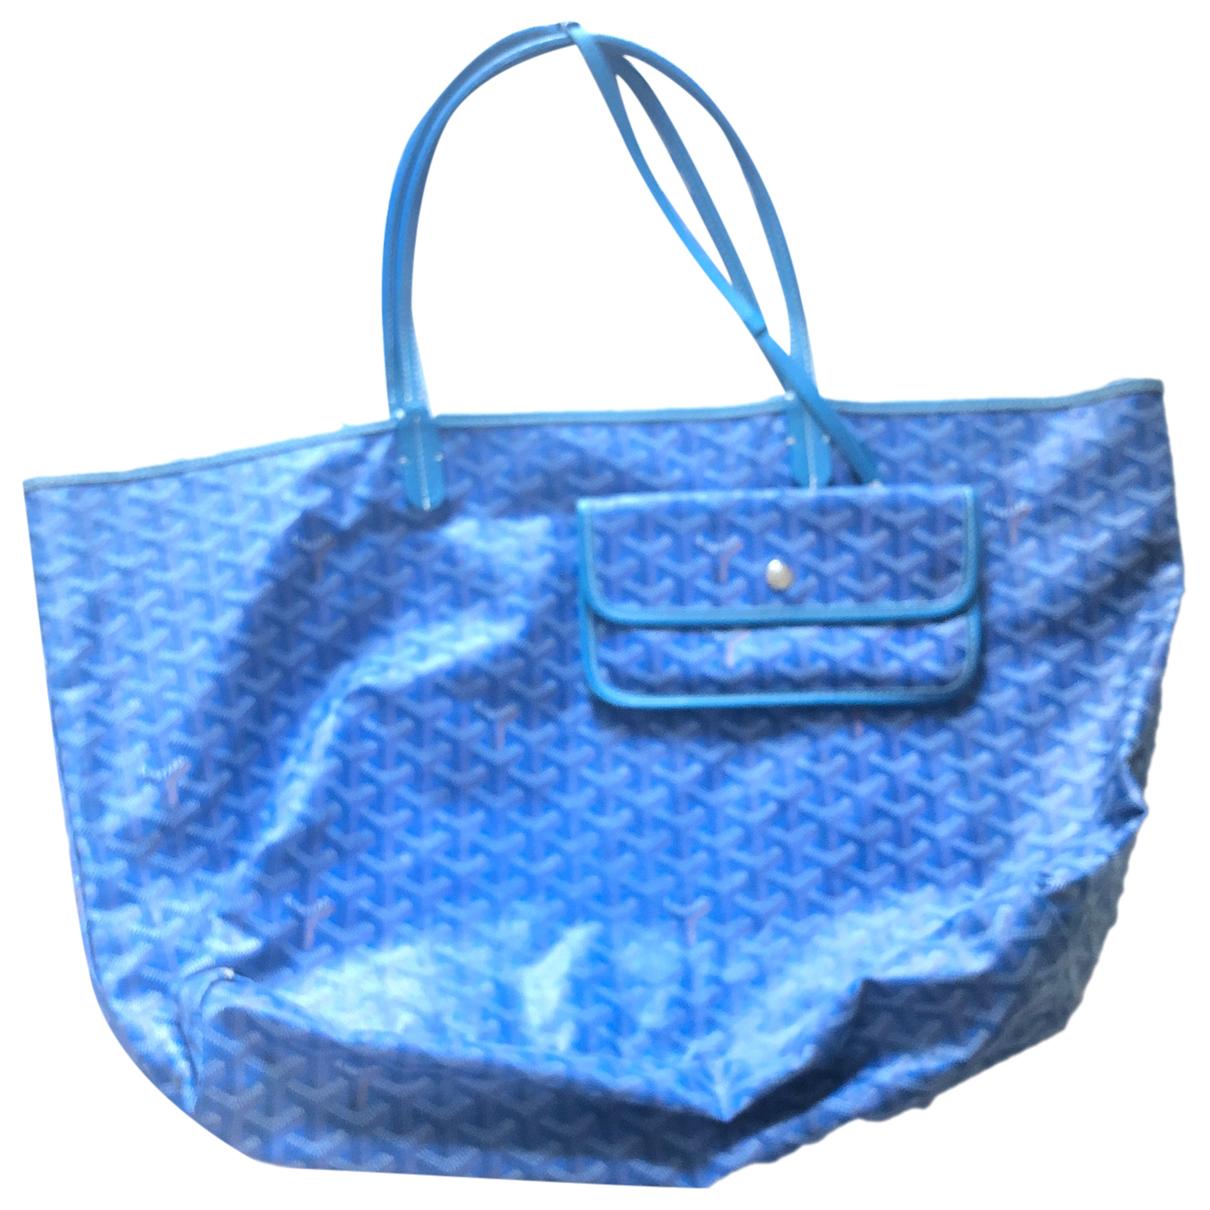 Artois cloth handbag